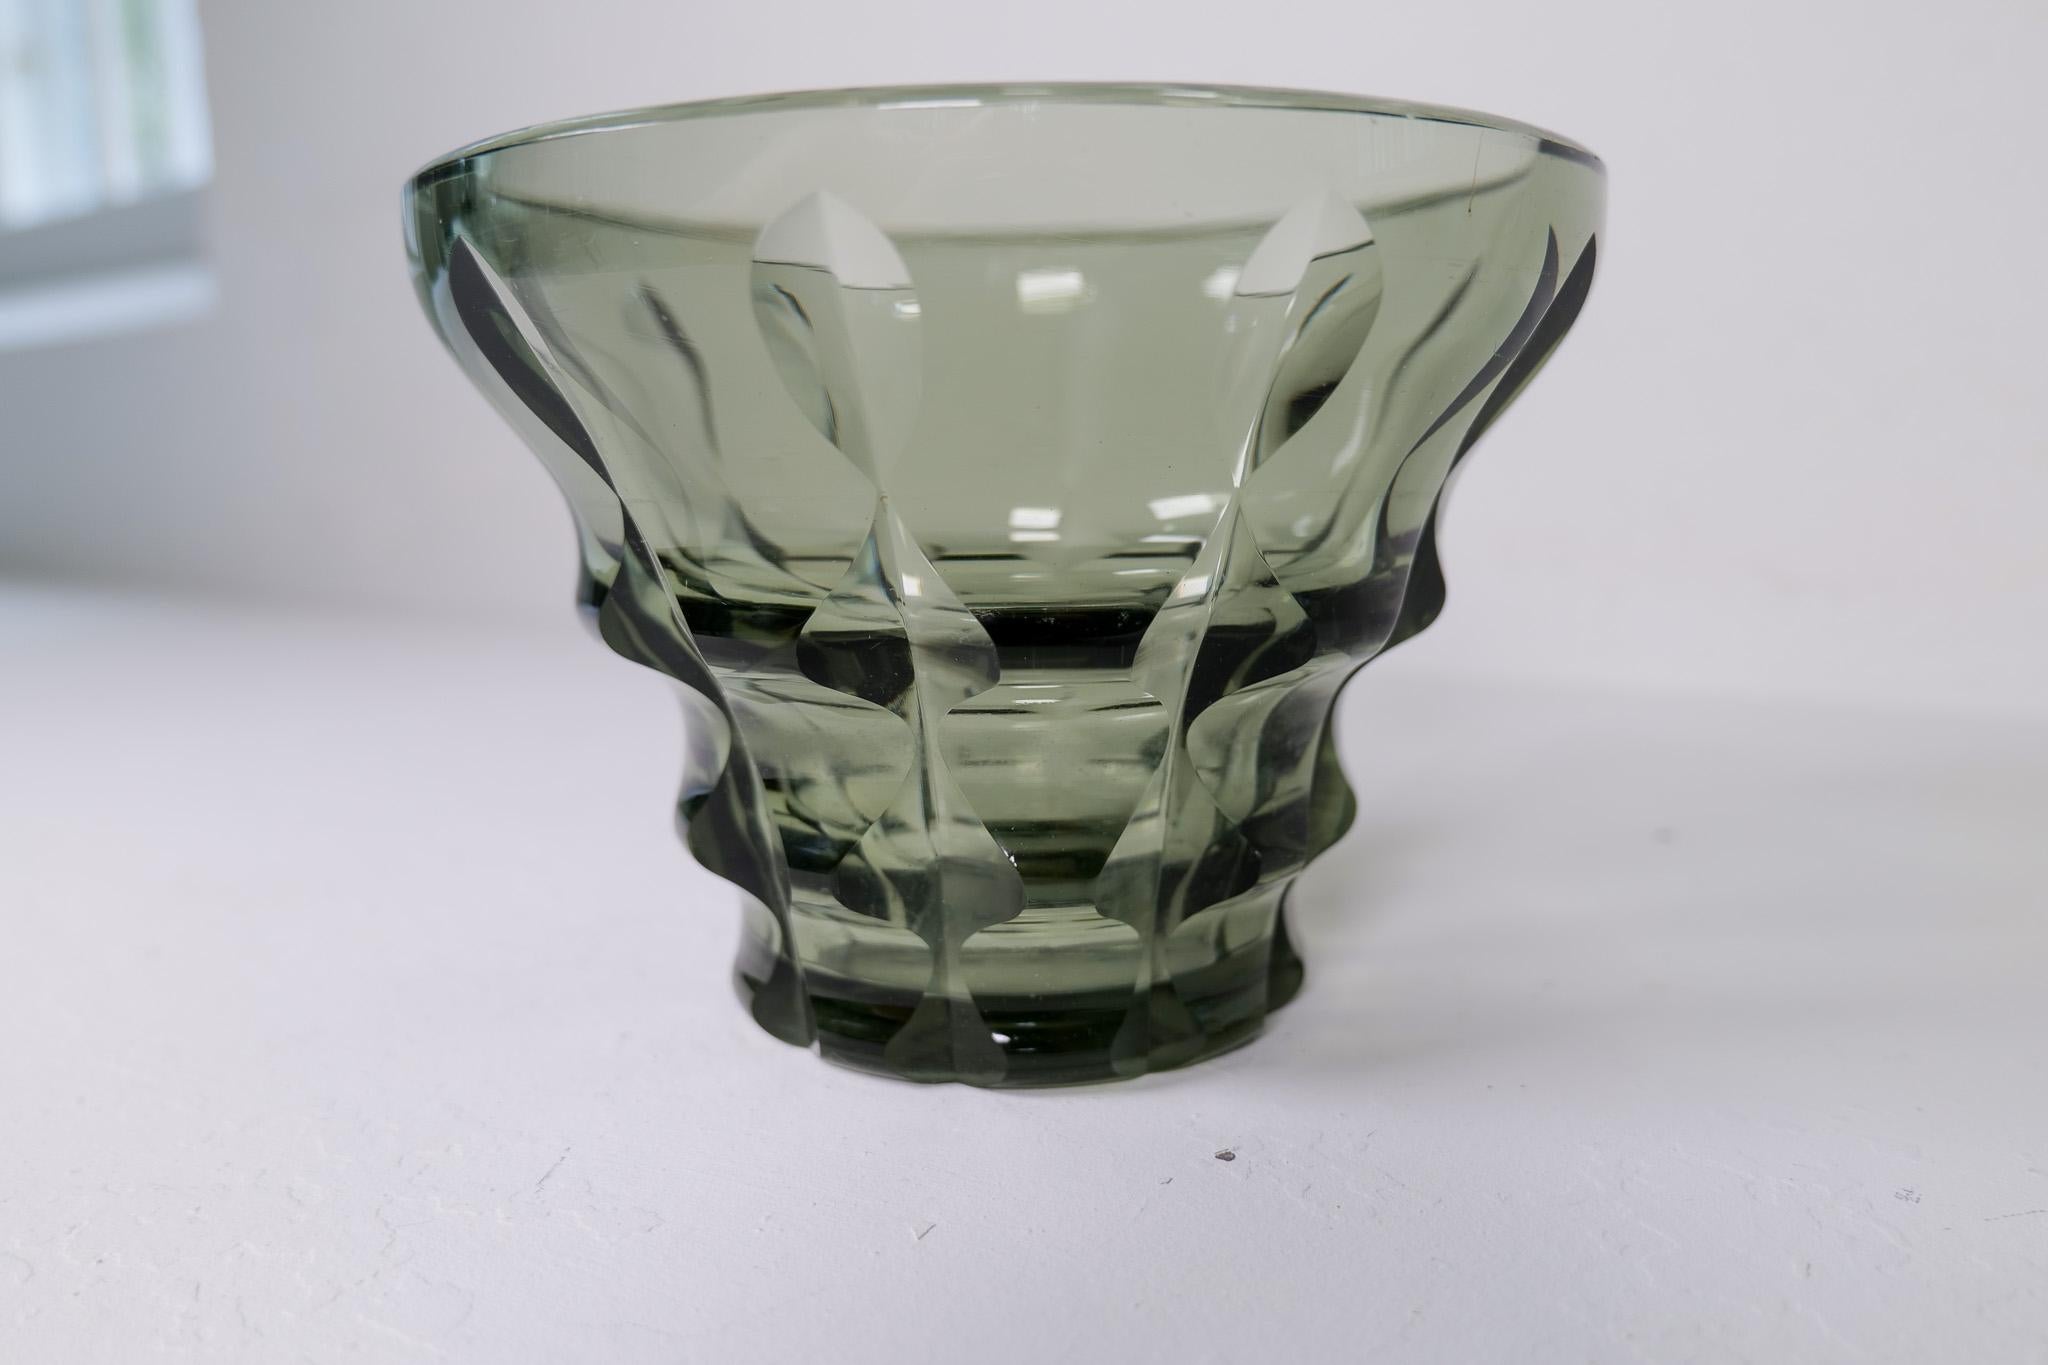  Art Deco Glass Bowl Sweden 1930s  For Sale 1